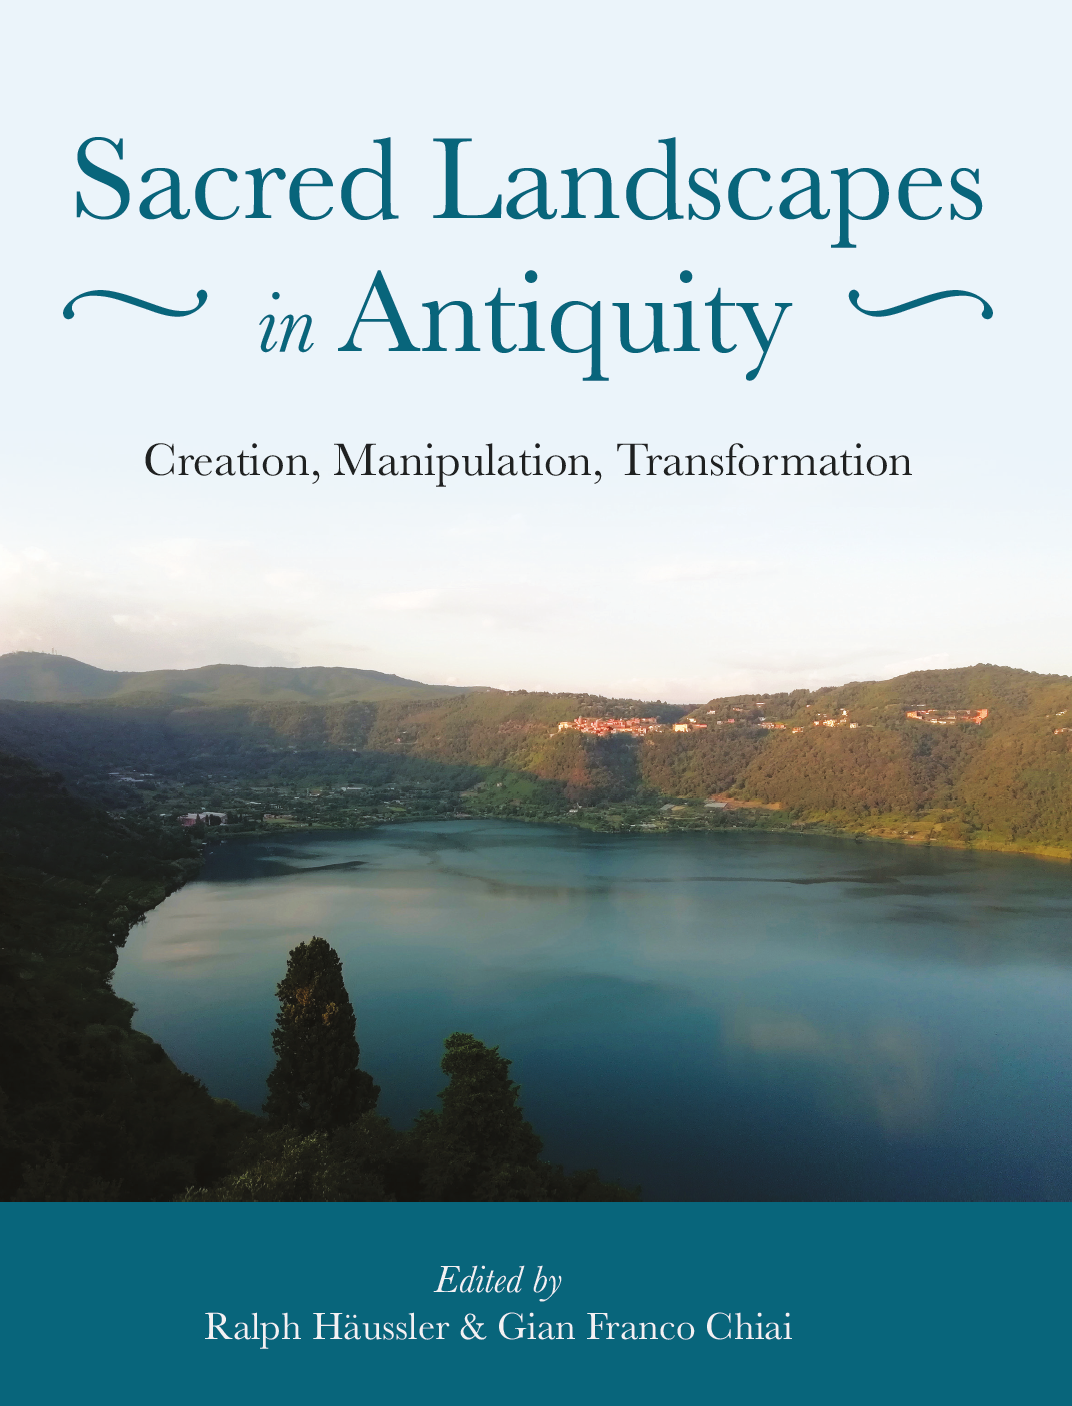 Sacred Landscapes in Antiquity, Creation, Manipulation, Transformaiton, paysages sacres. Ralph Haeussler